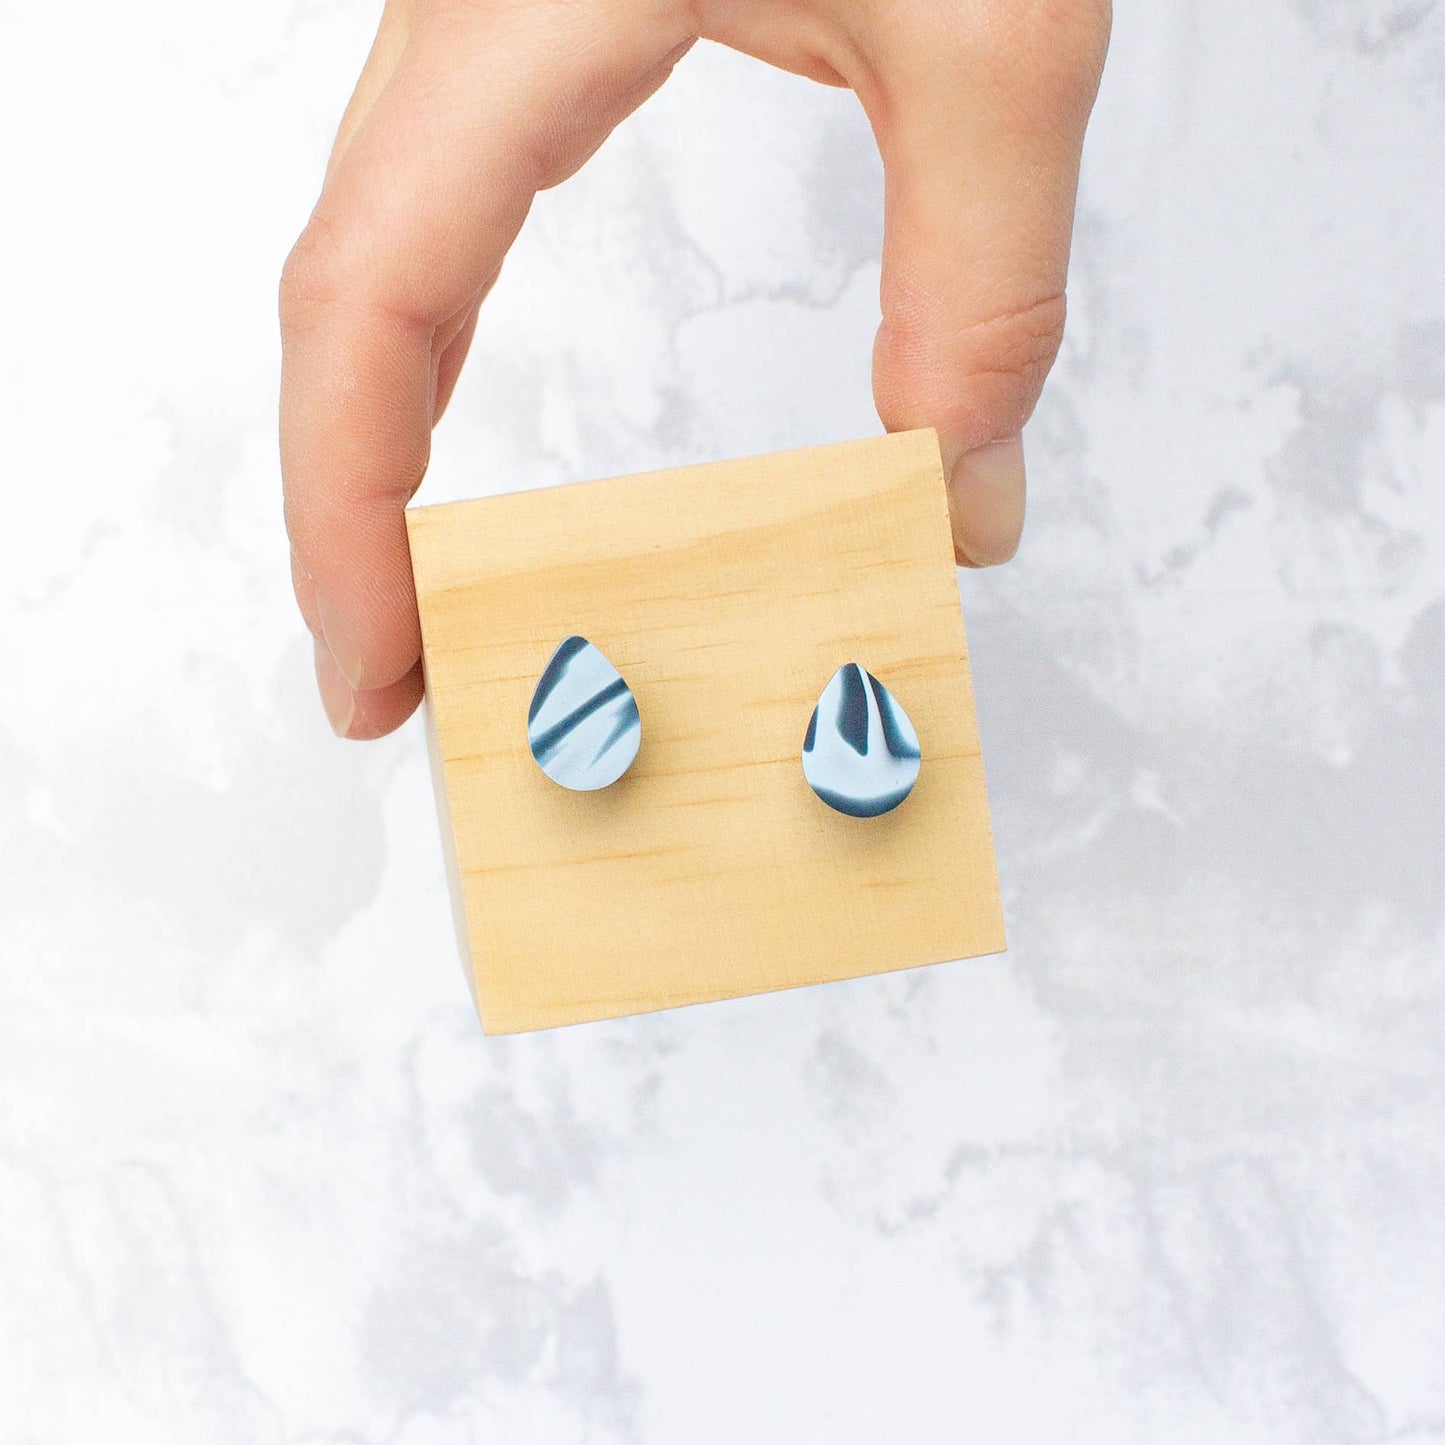 Olim Clay Co. - Tiny Water Studs | Handmade Polymer Clay Earrings